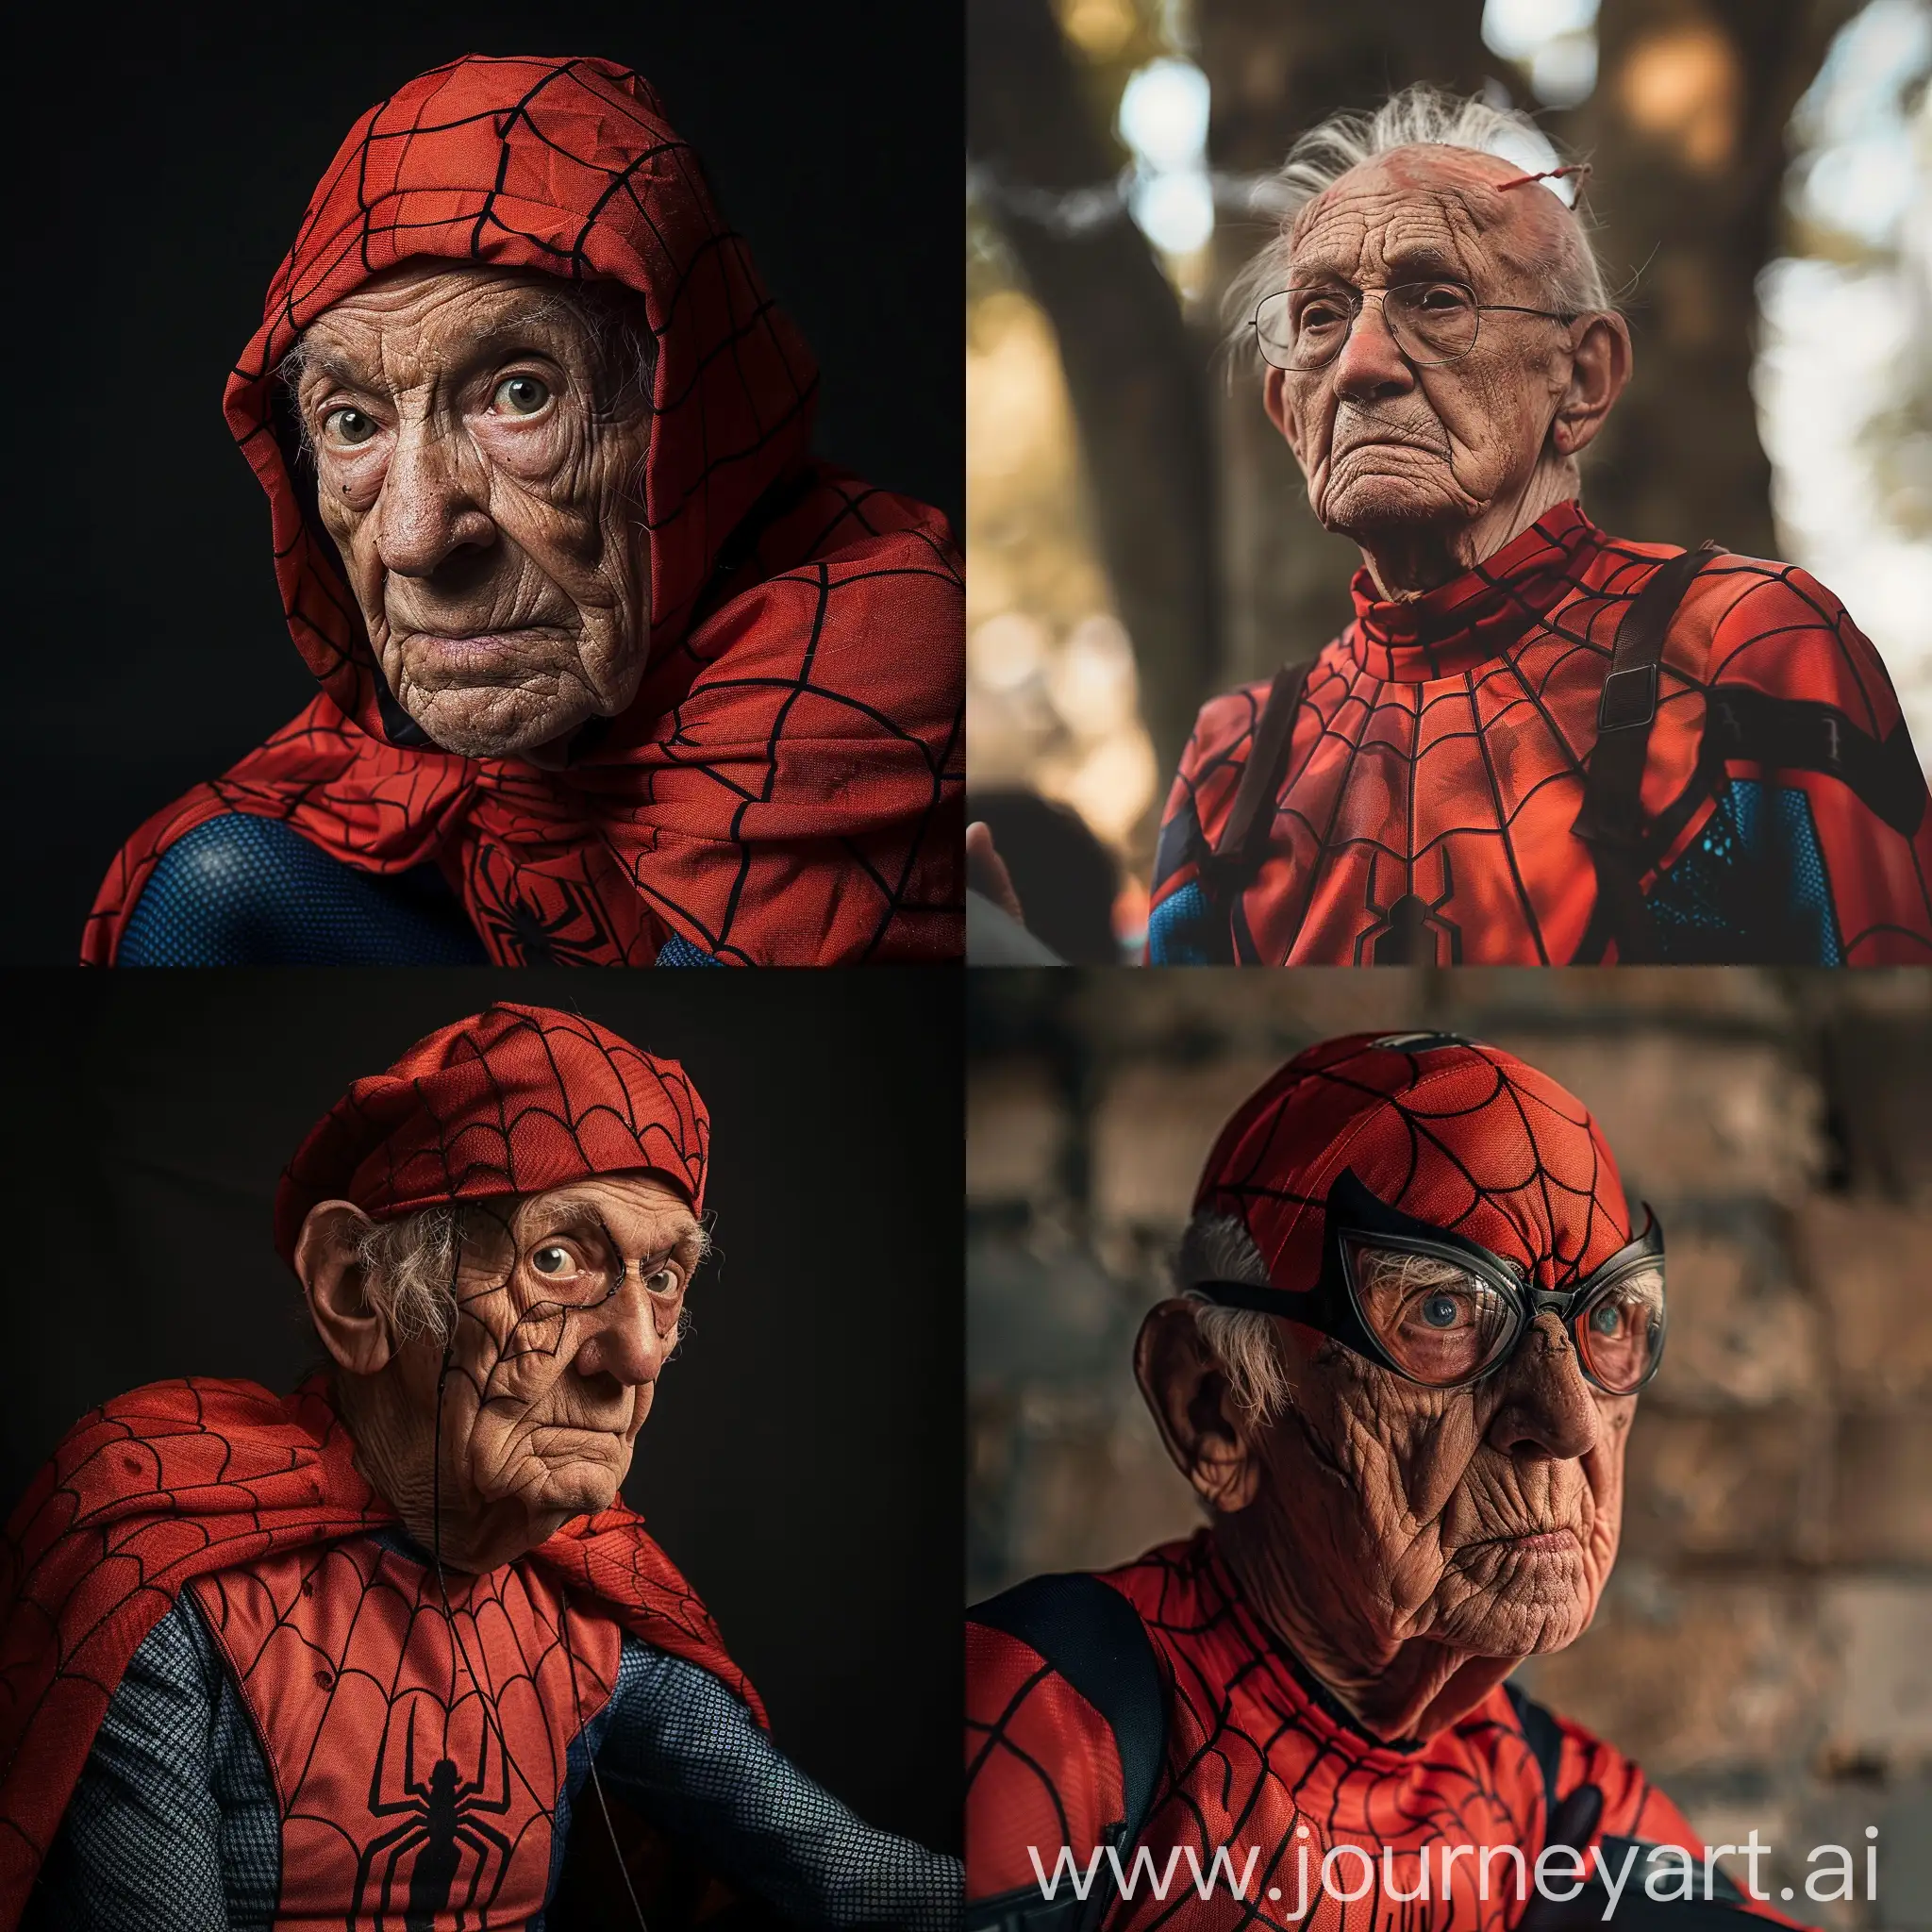 An elderly old man dressed as spiderman